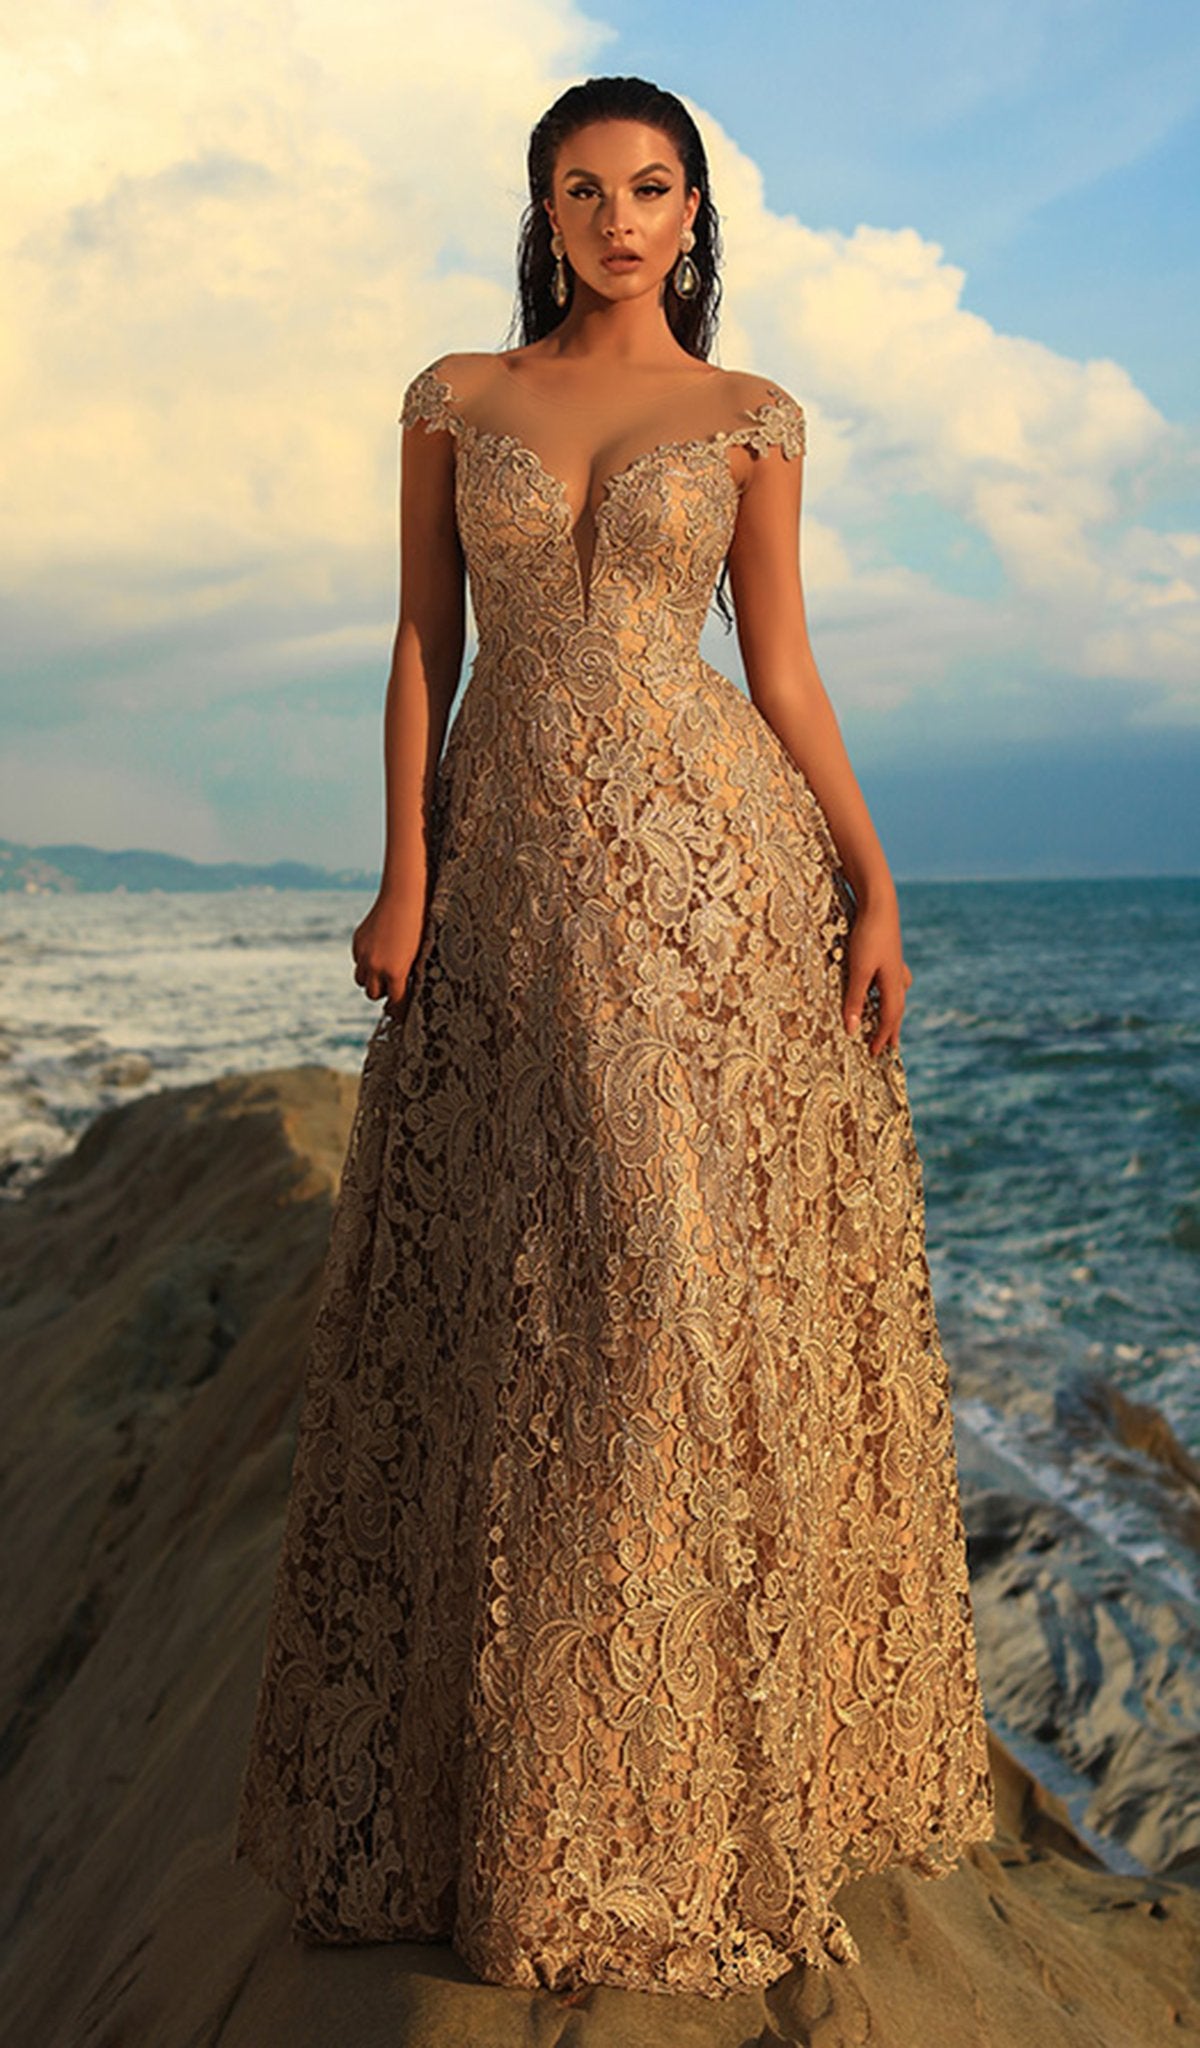 Tarik Ediz - 93739 Floral Lace Illusion Neck A-line Dress In Gold